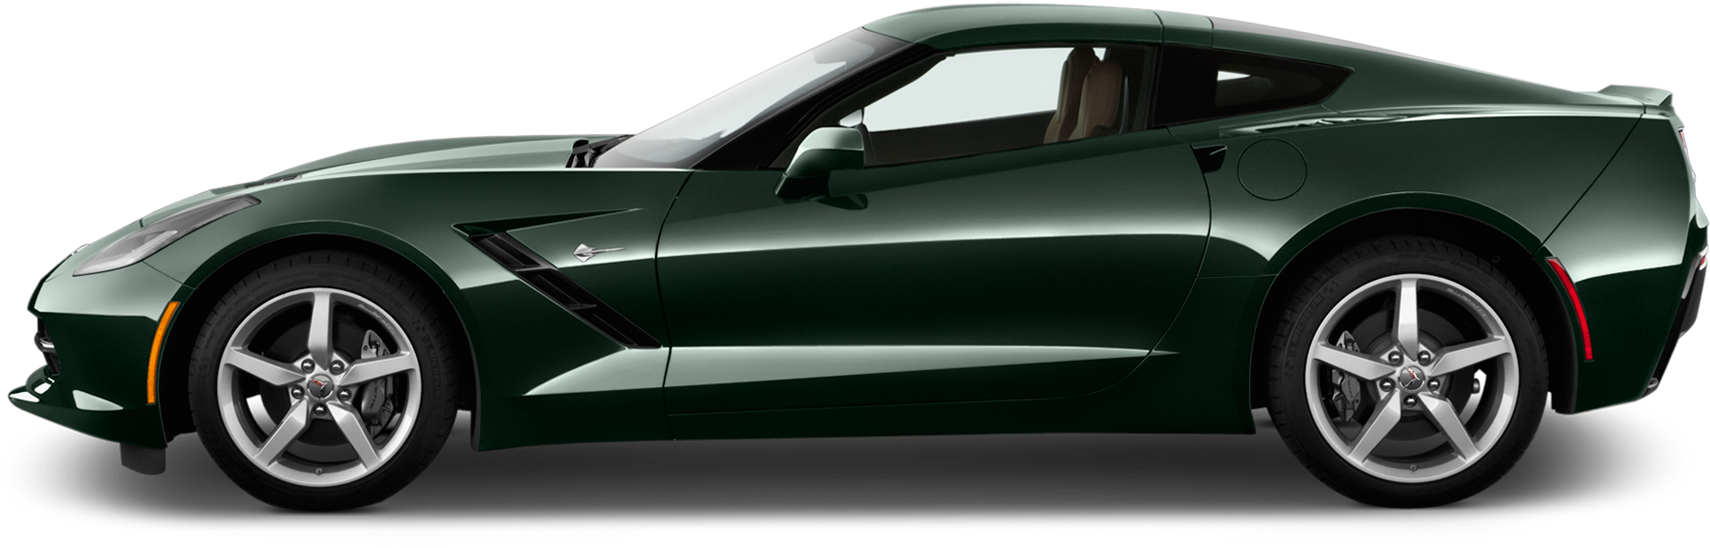 42 - - Chevrolet Corvette 2017 Side View (2048x1360)